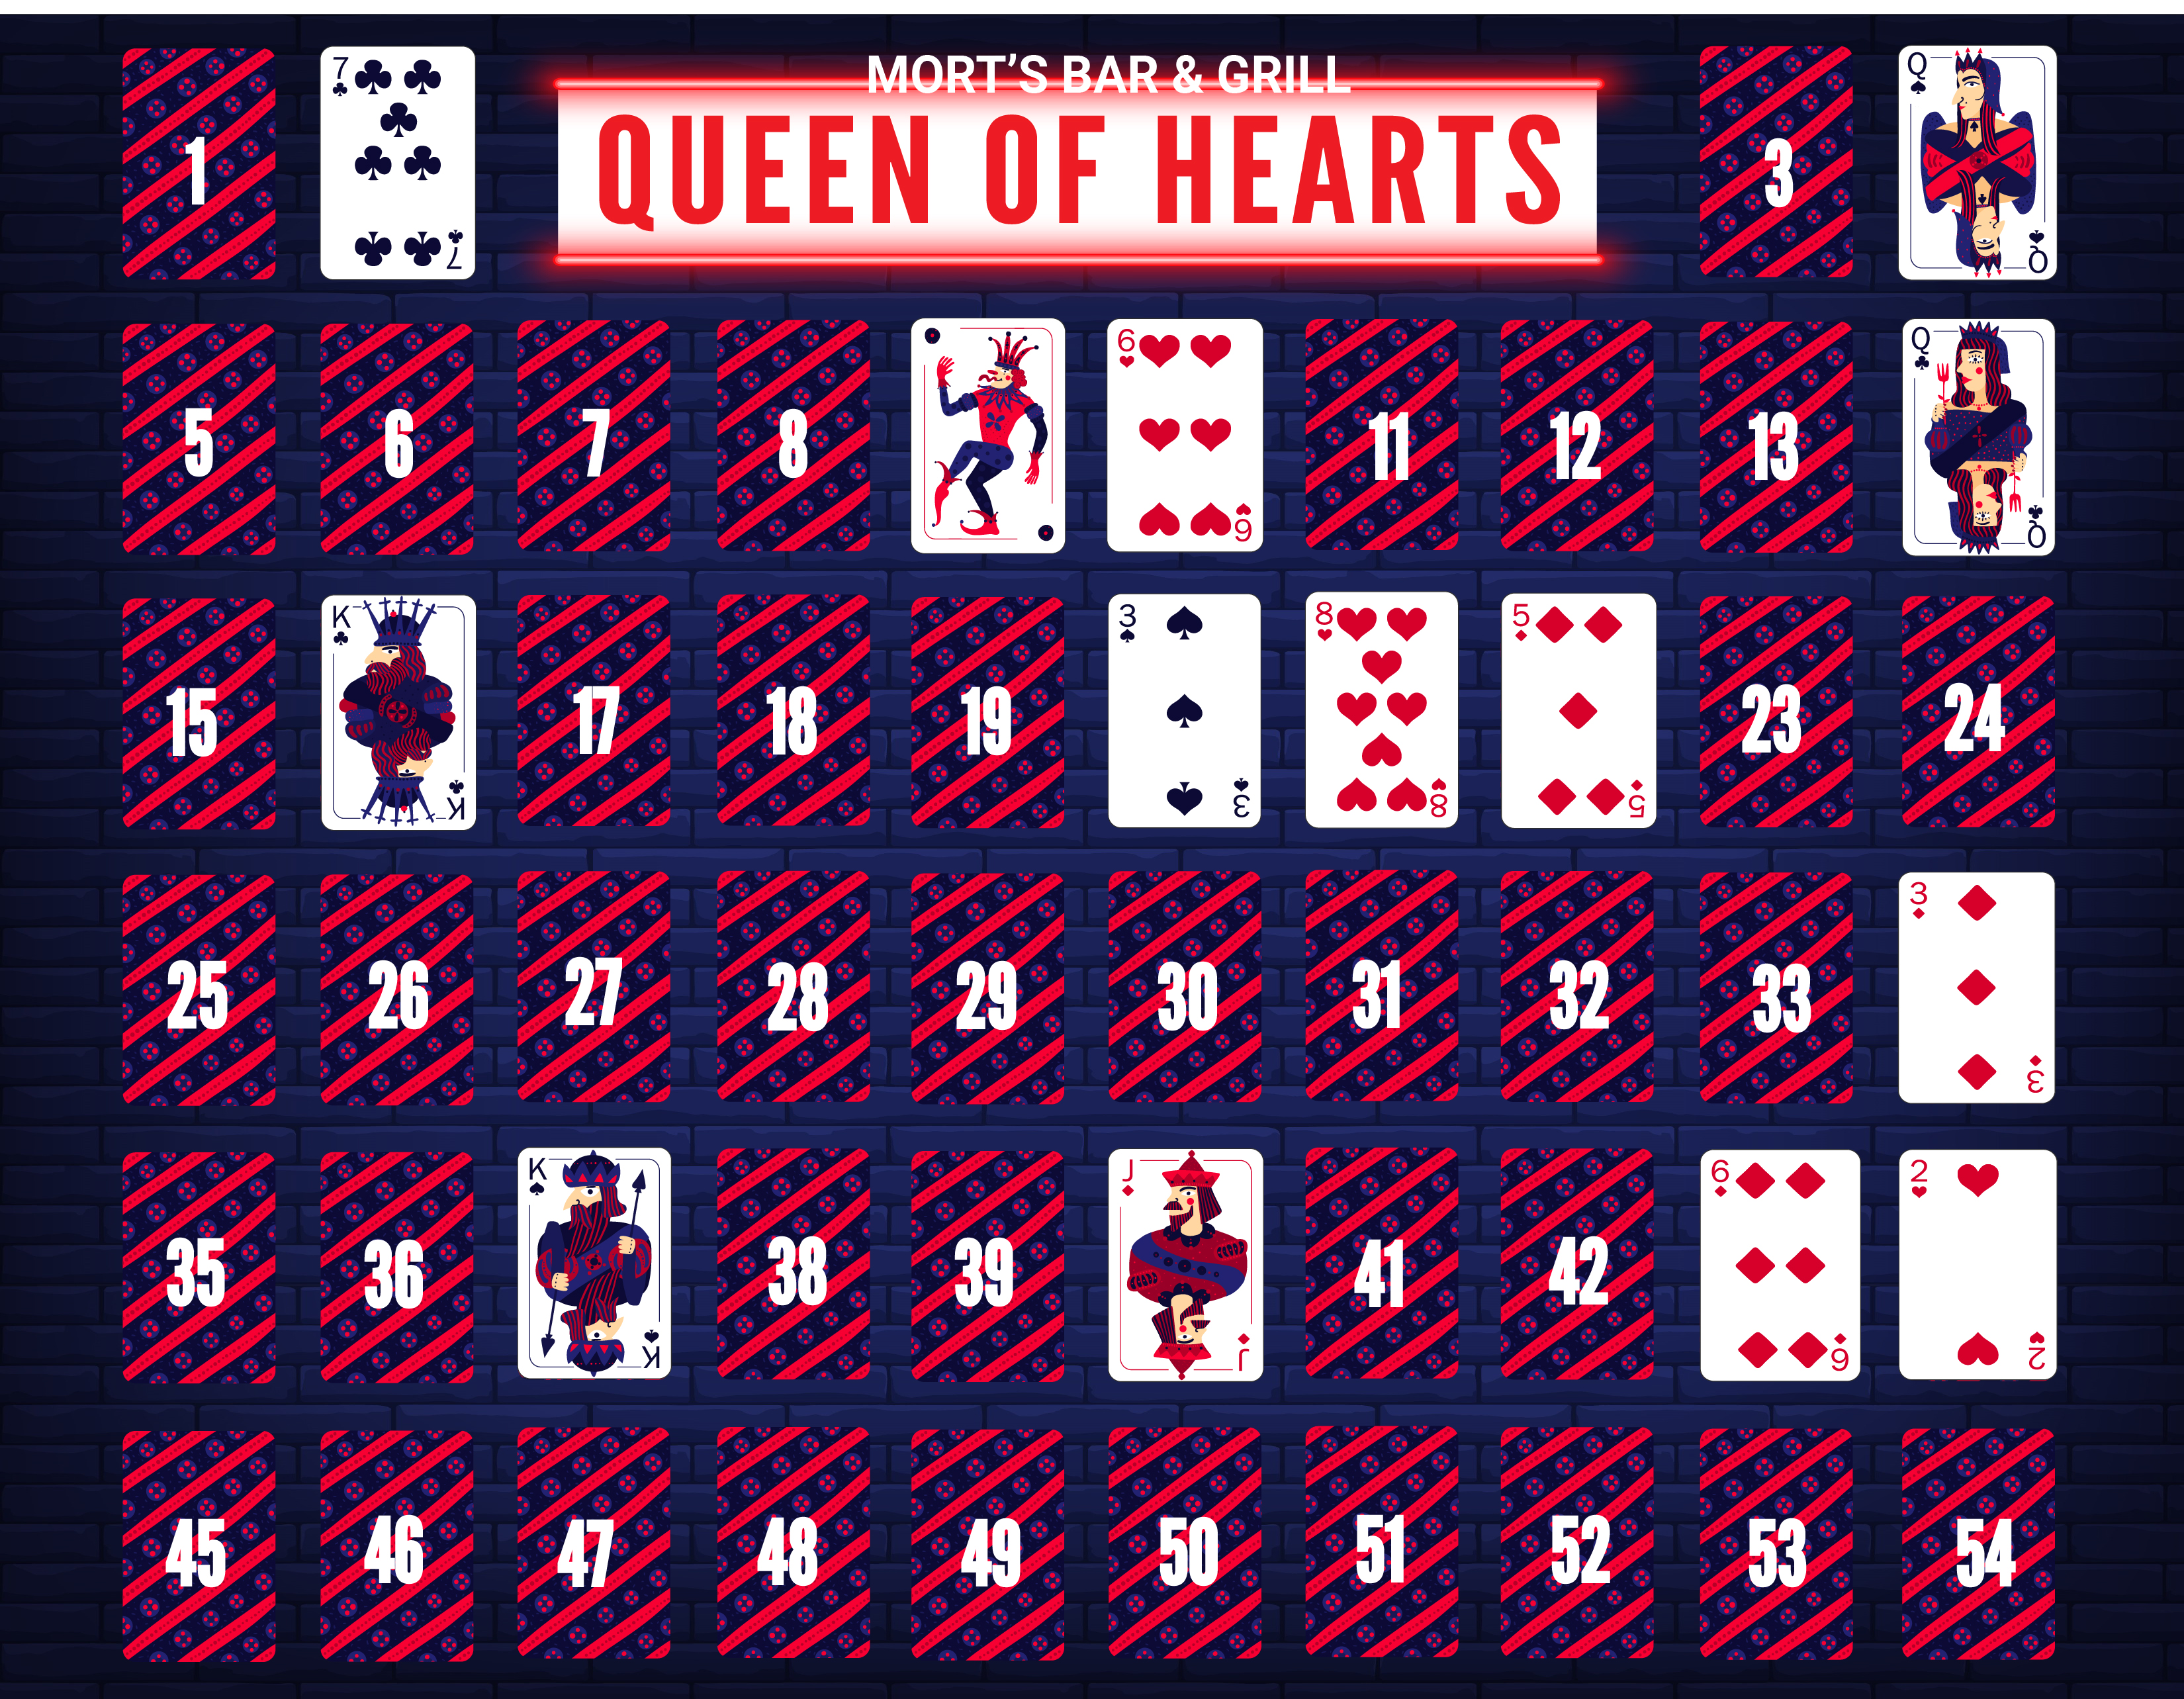 August 20, 2022 - Card 22 - five of diamonds